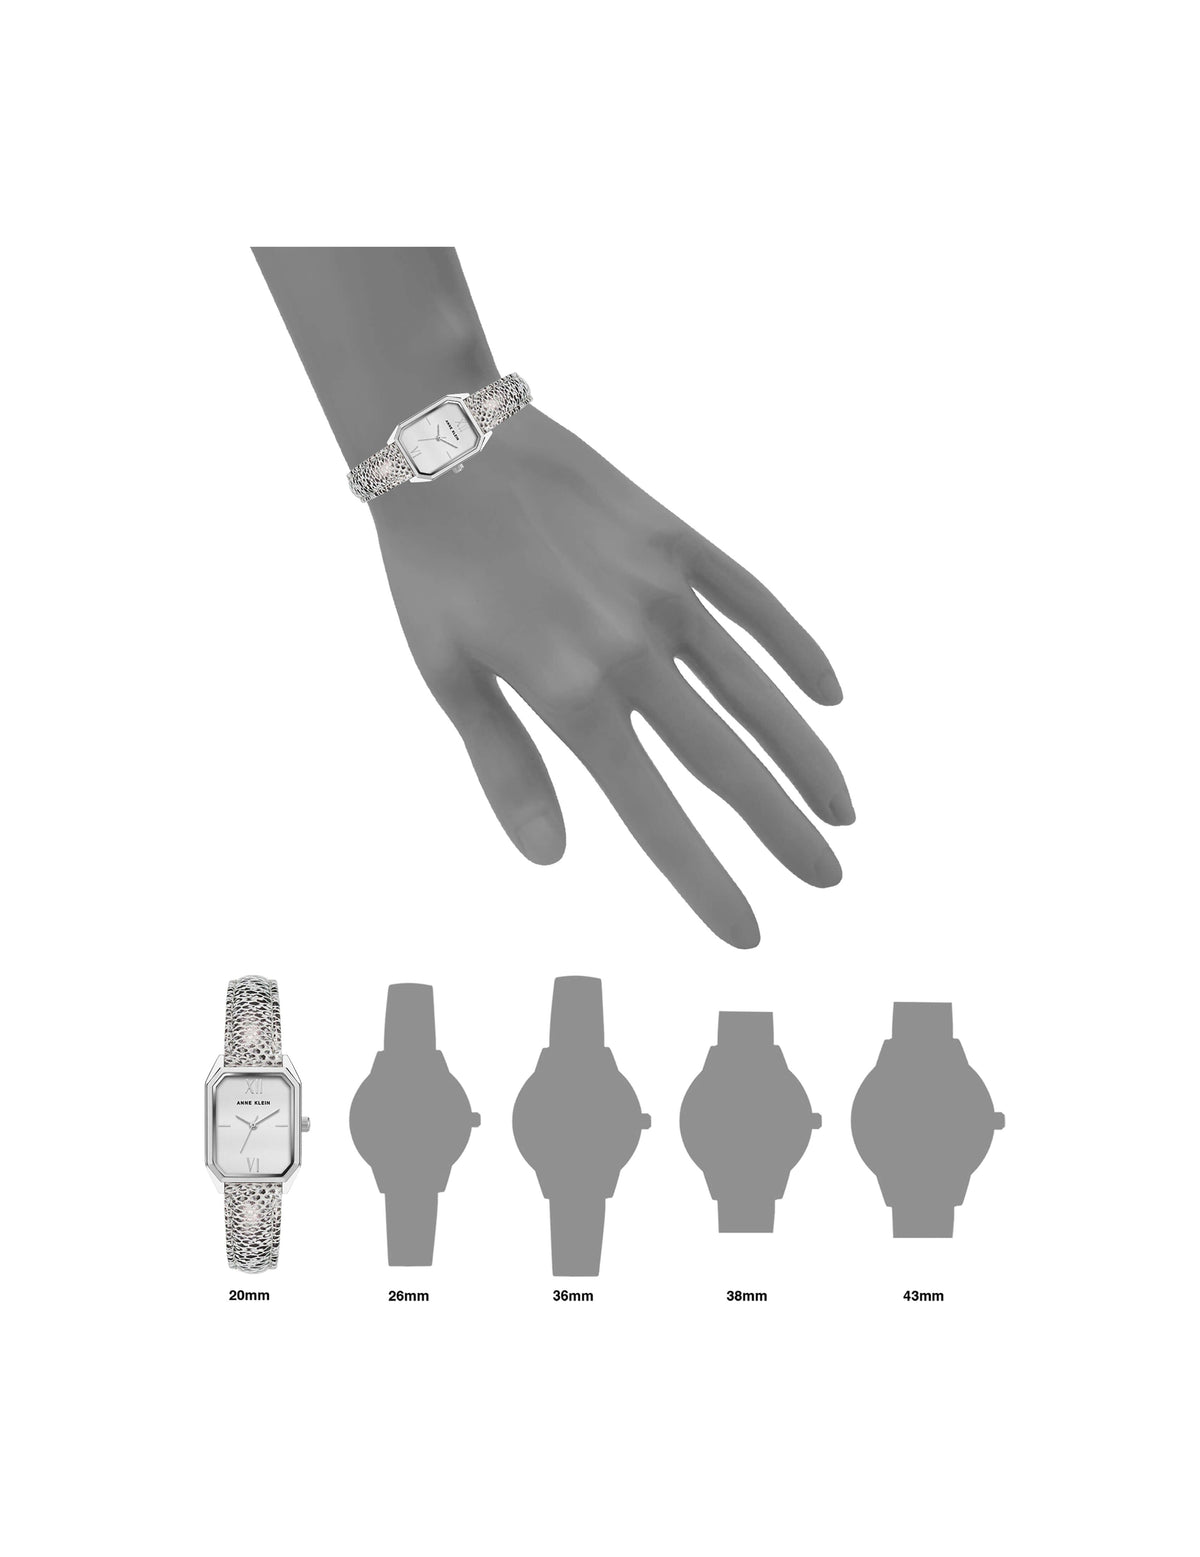 Anne Klein  Octagonal Shaped Leather Strap Watch